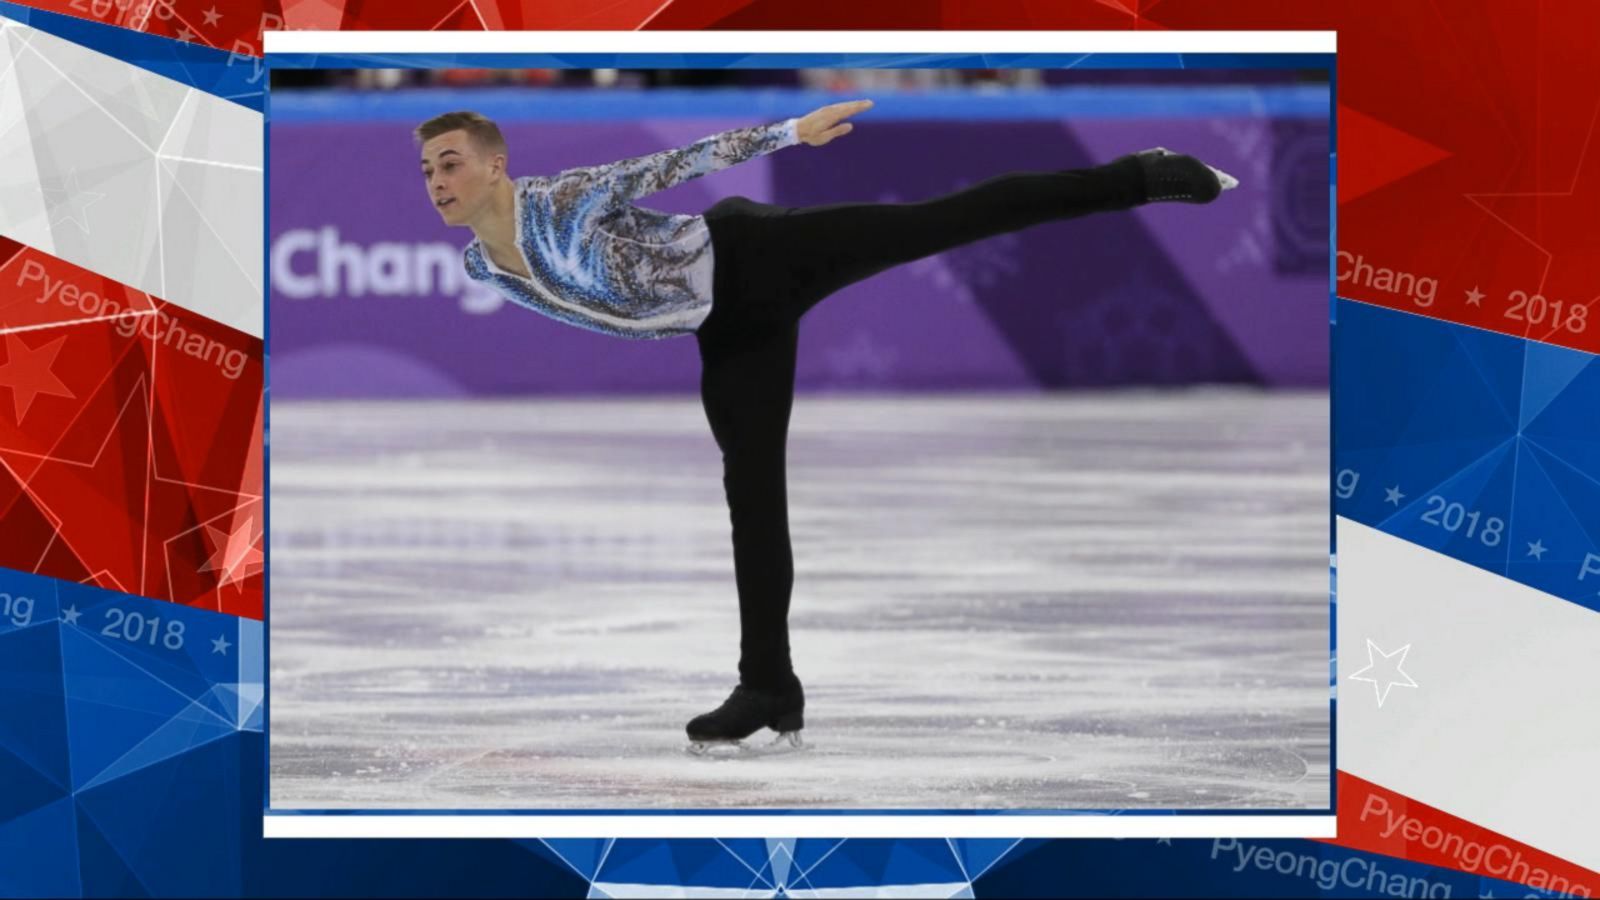 VIDEO: U.S. figure skater makes history at Winter Olympics